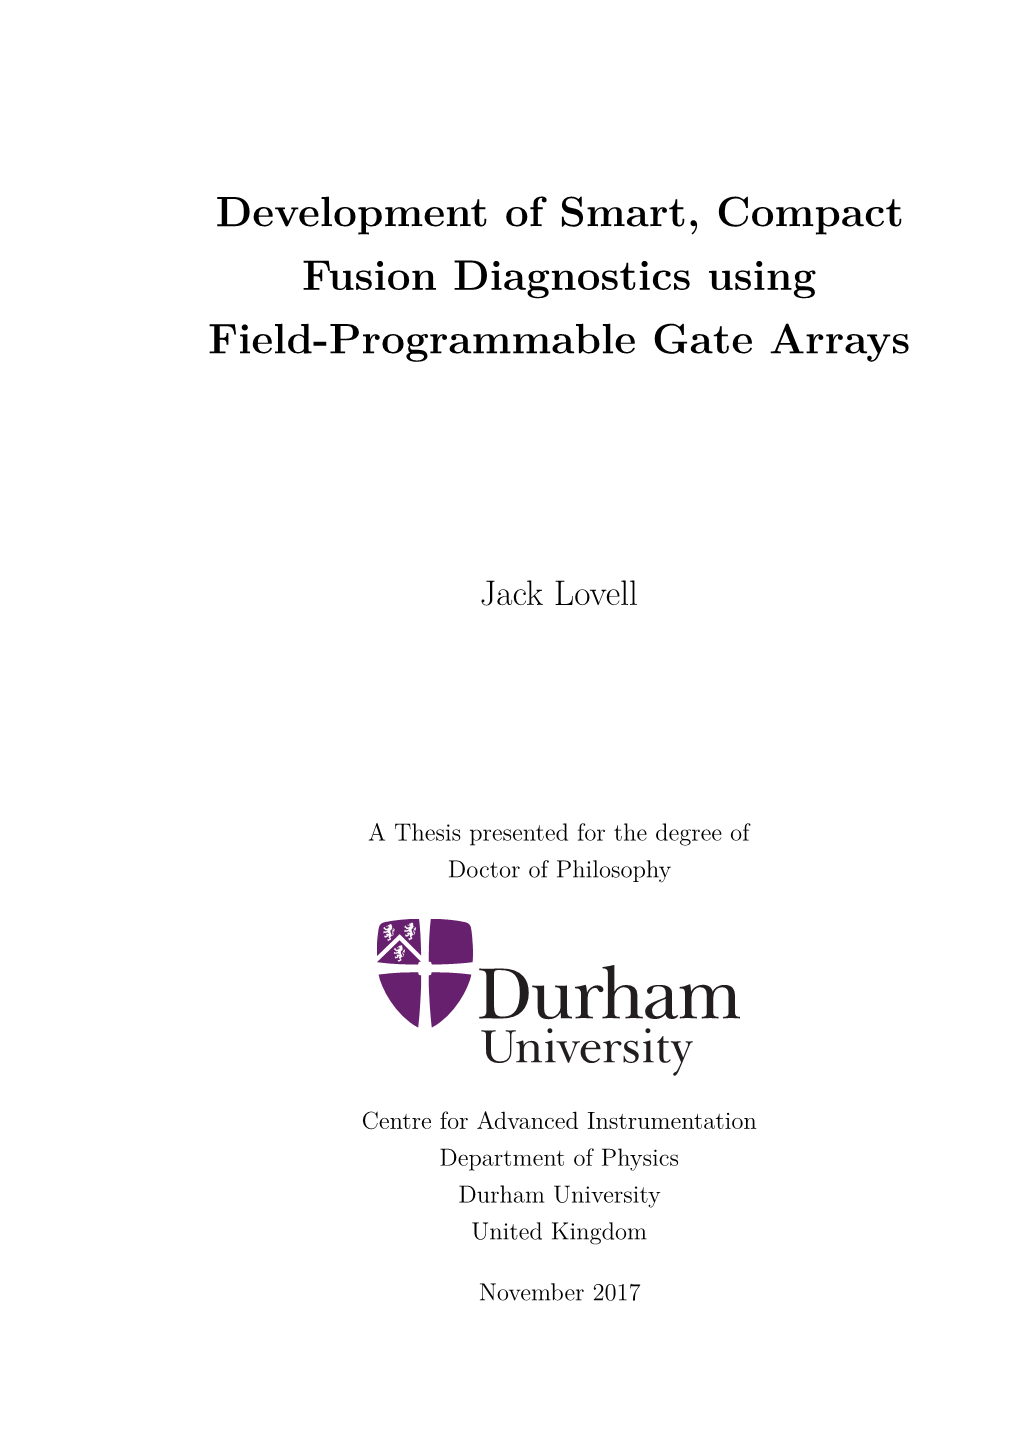 Development of Smart, Compact Fusion Diagnostics Using Field-Programmable Gate Arrays